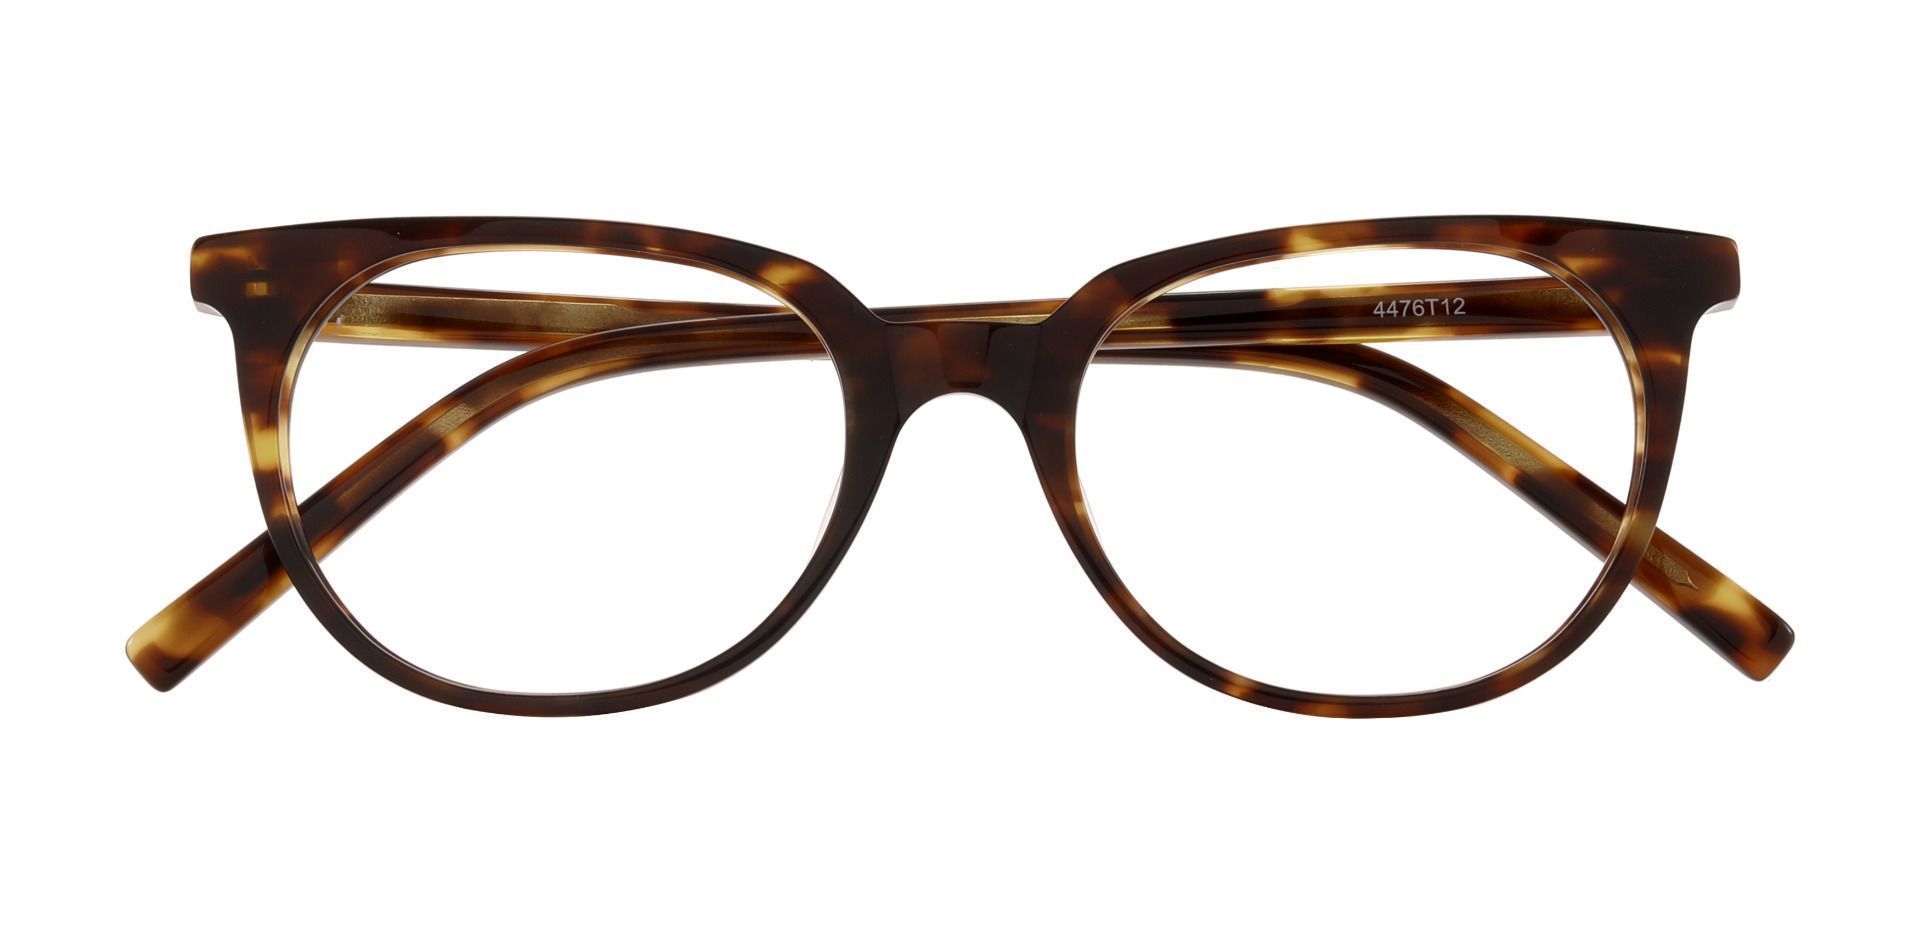 Parrish Oval Prescription Glasses - Tortoise